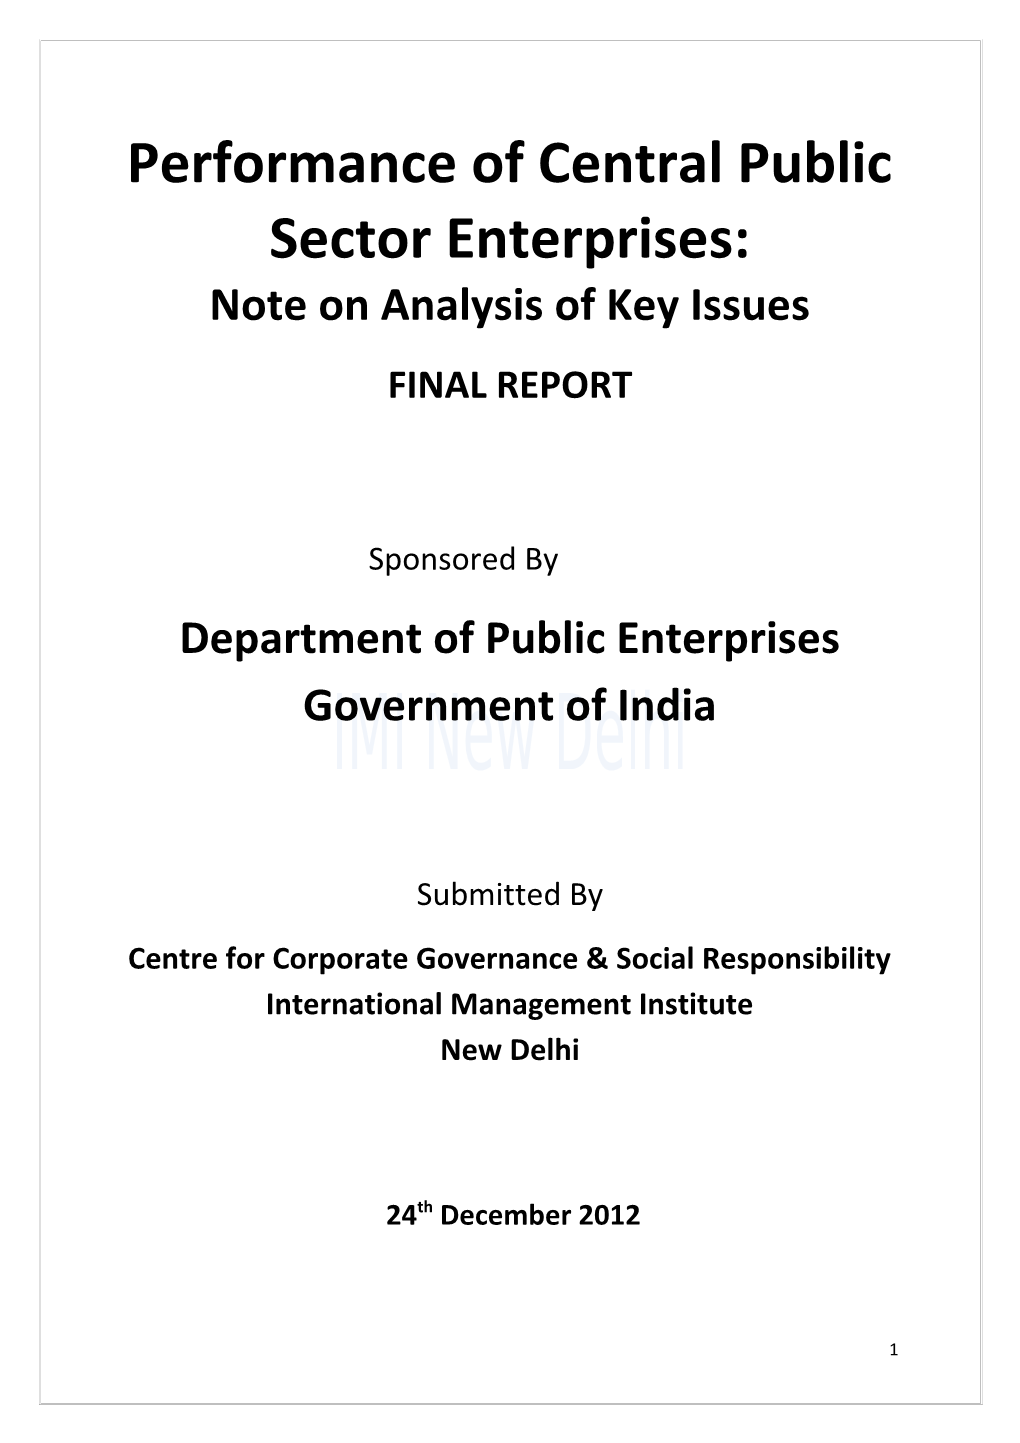 Performance of Central Public Sector Enterprises